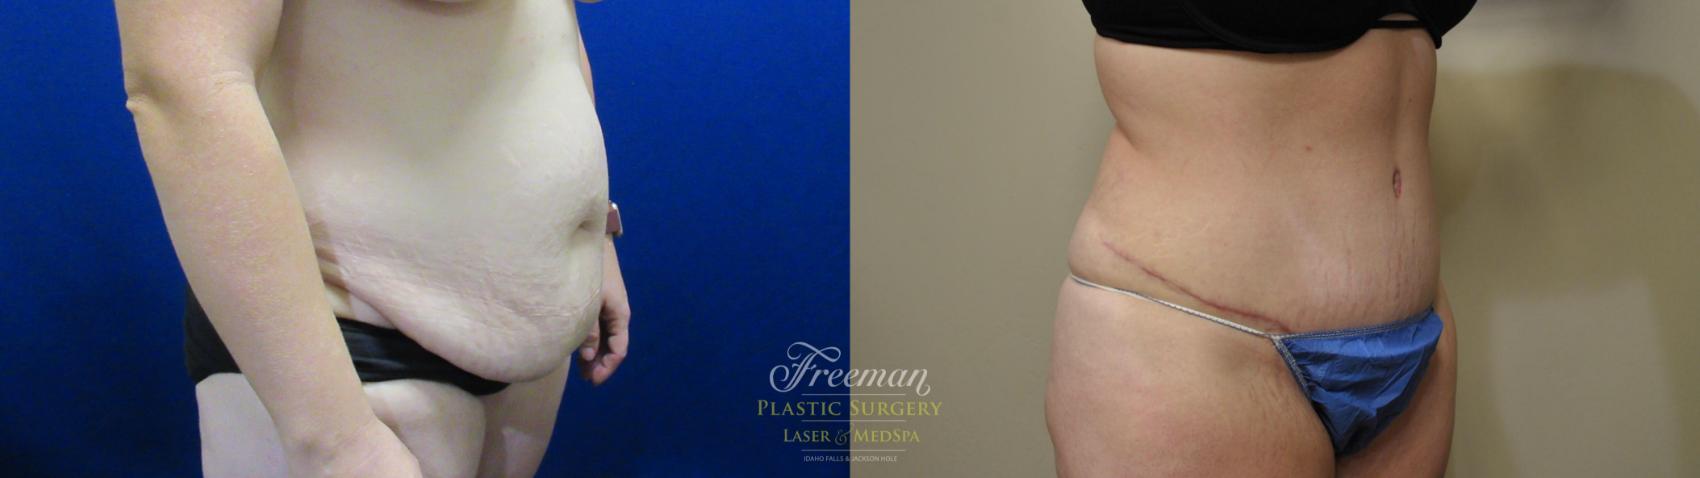 Tummy Tuck Before & After Photo | Idaho Falls, ID | Dr. Mark Freeman